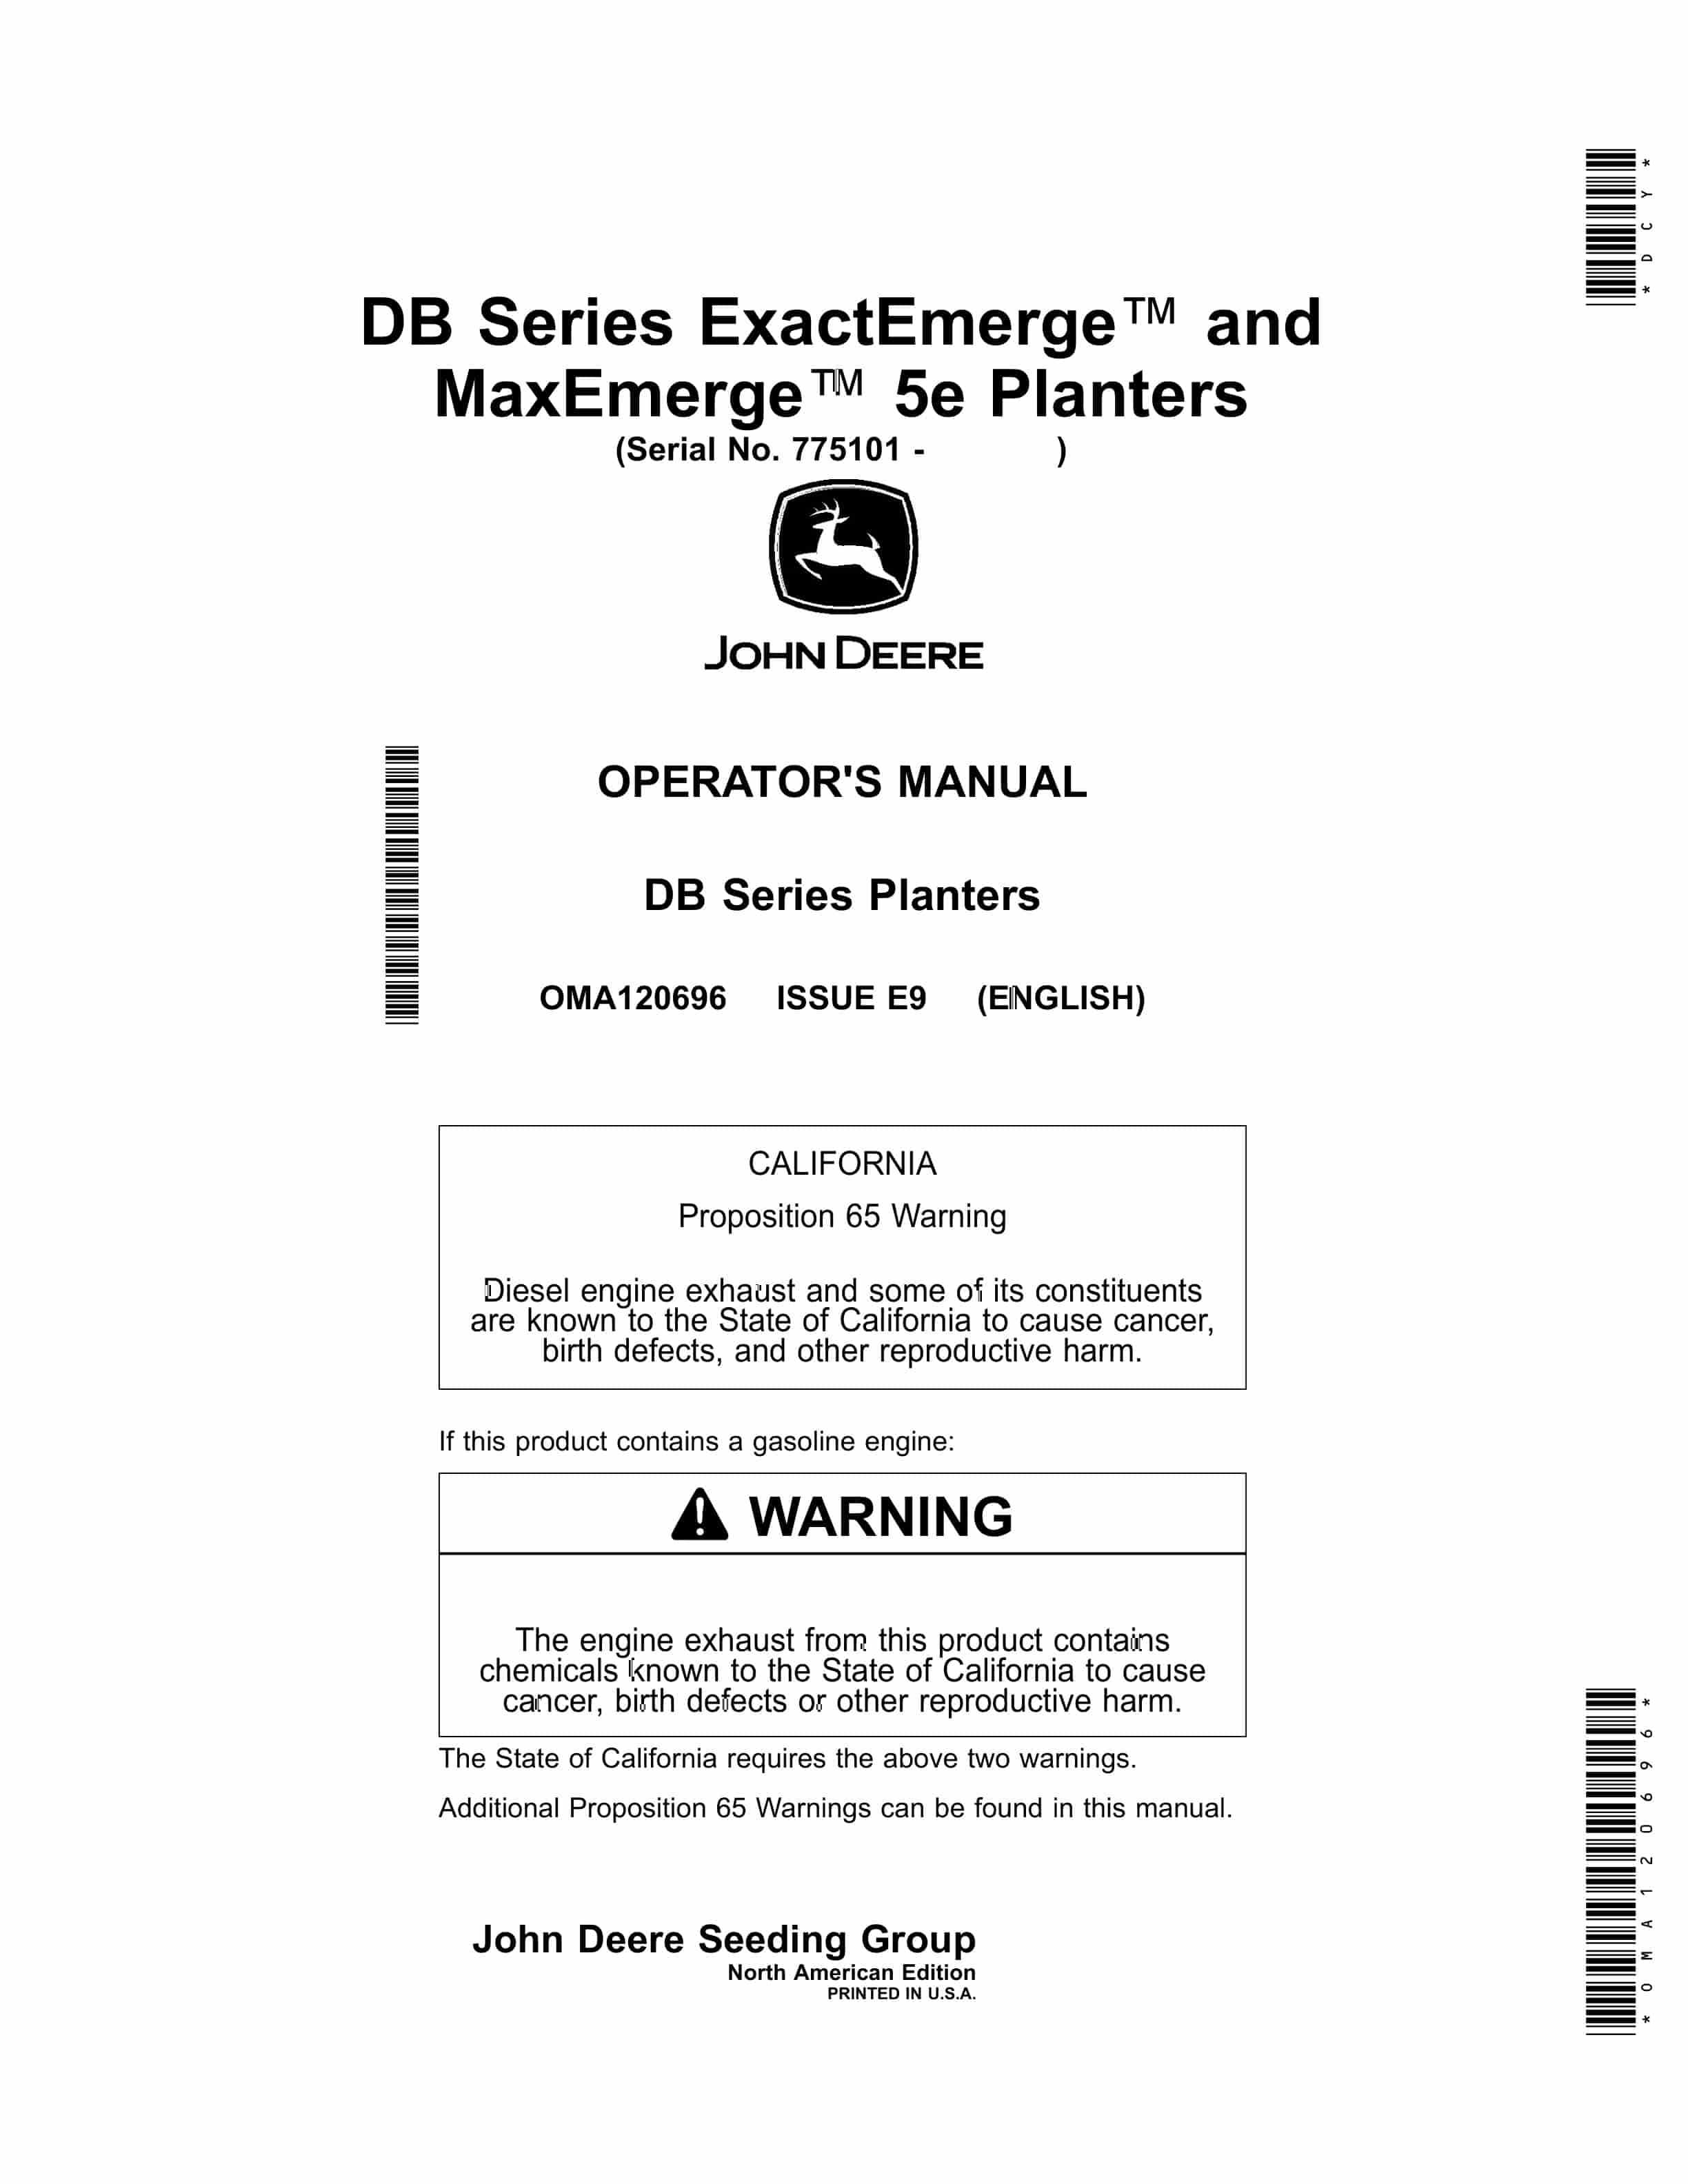 John Deere DB Series ExactEmerge and MaxEmerge 5e Planter Operator Manual OMA120696 1